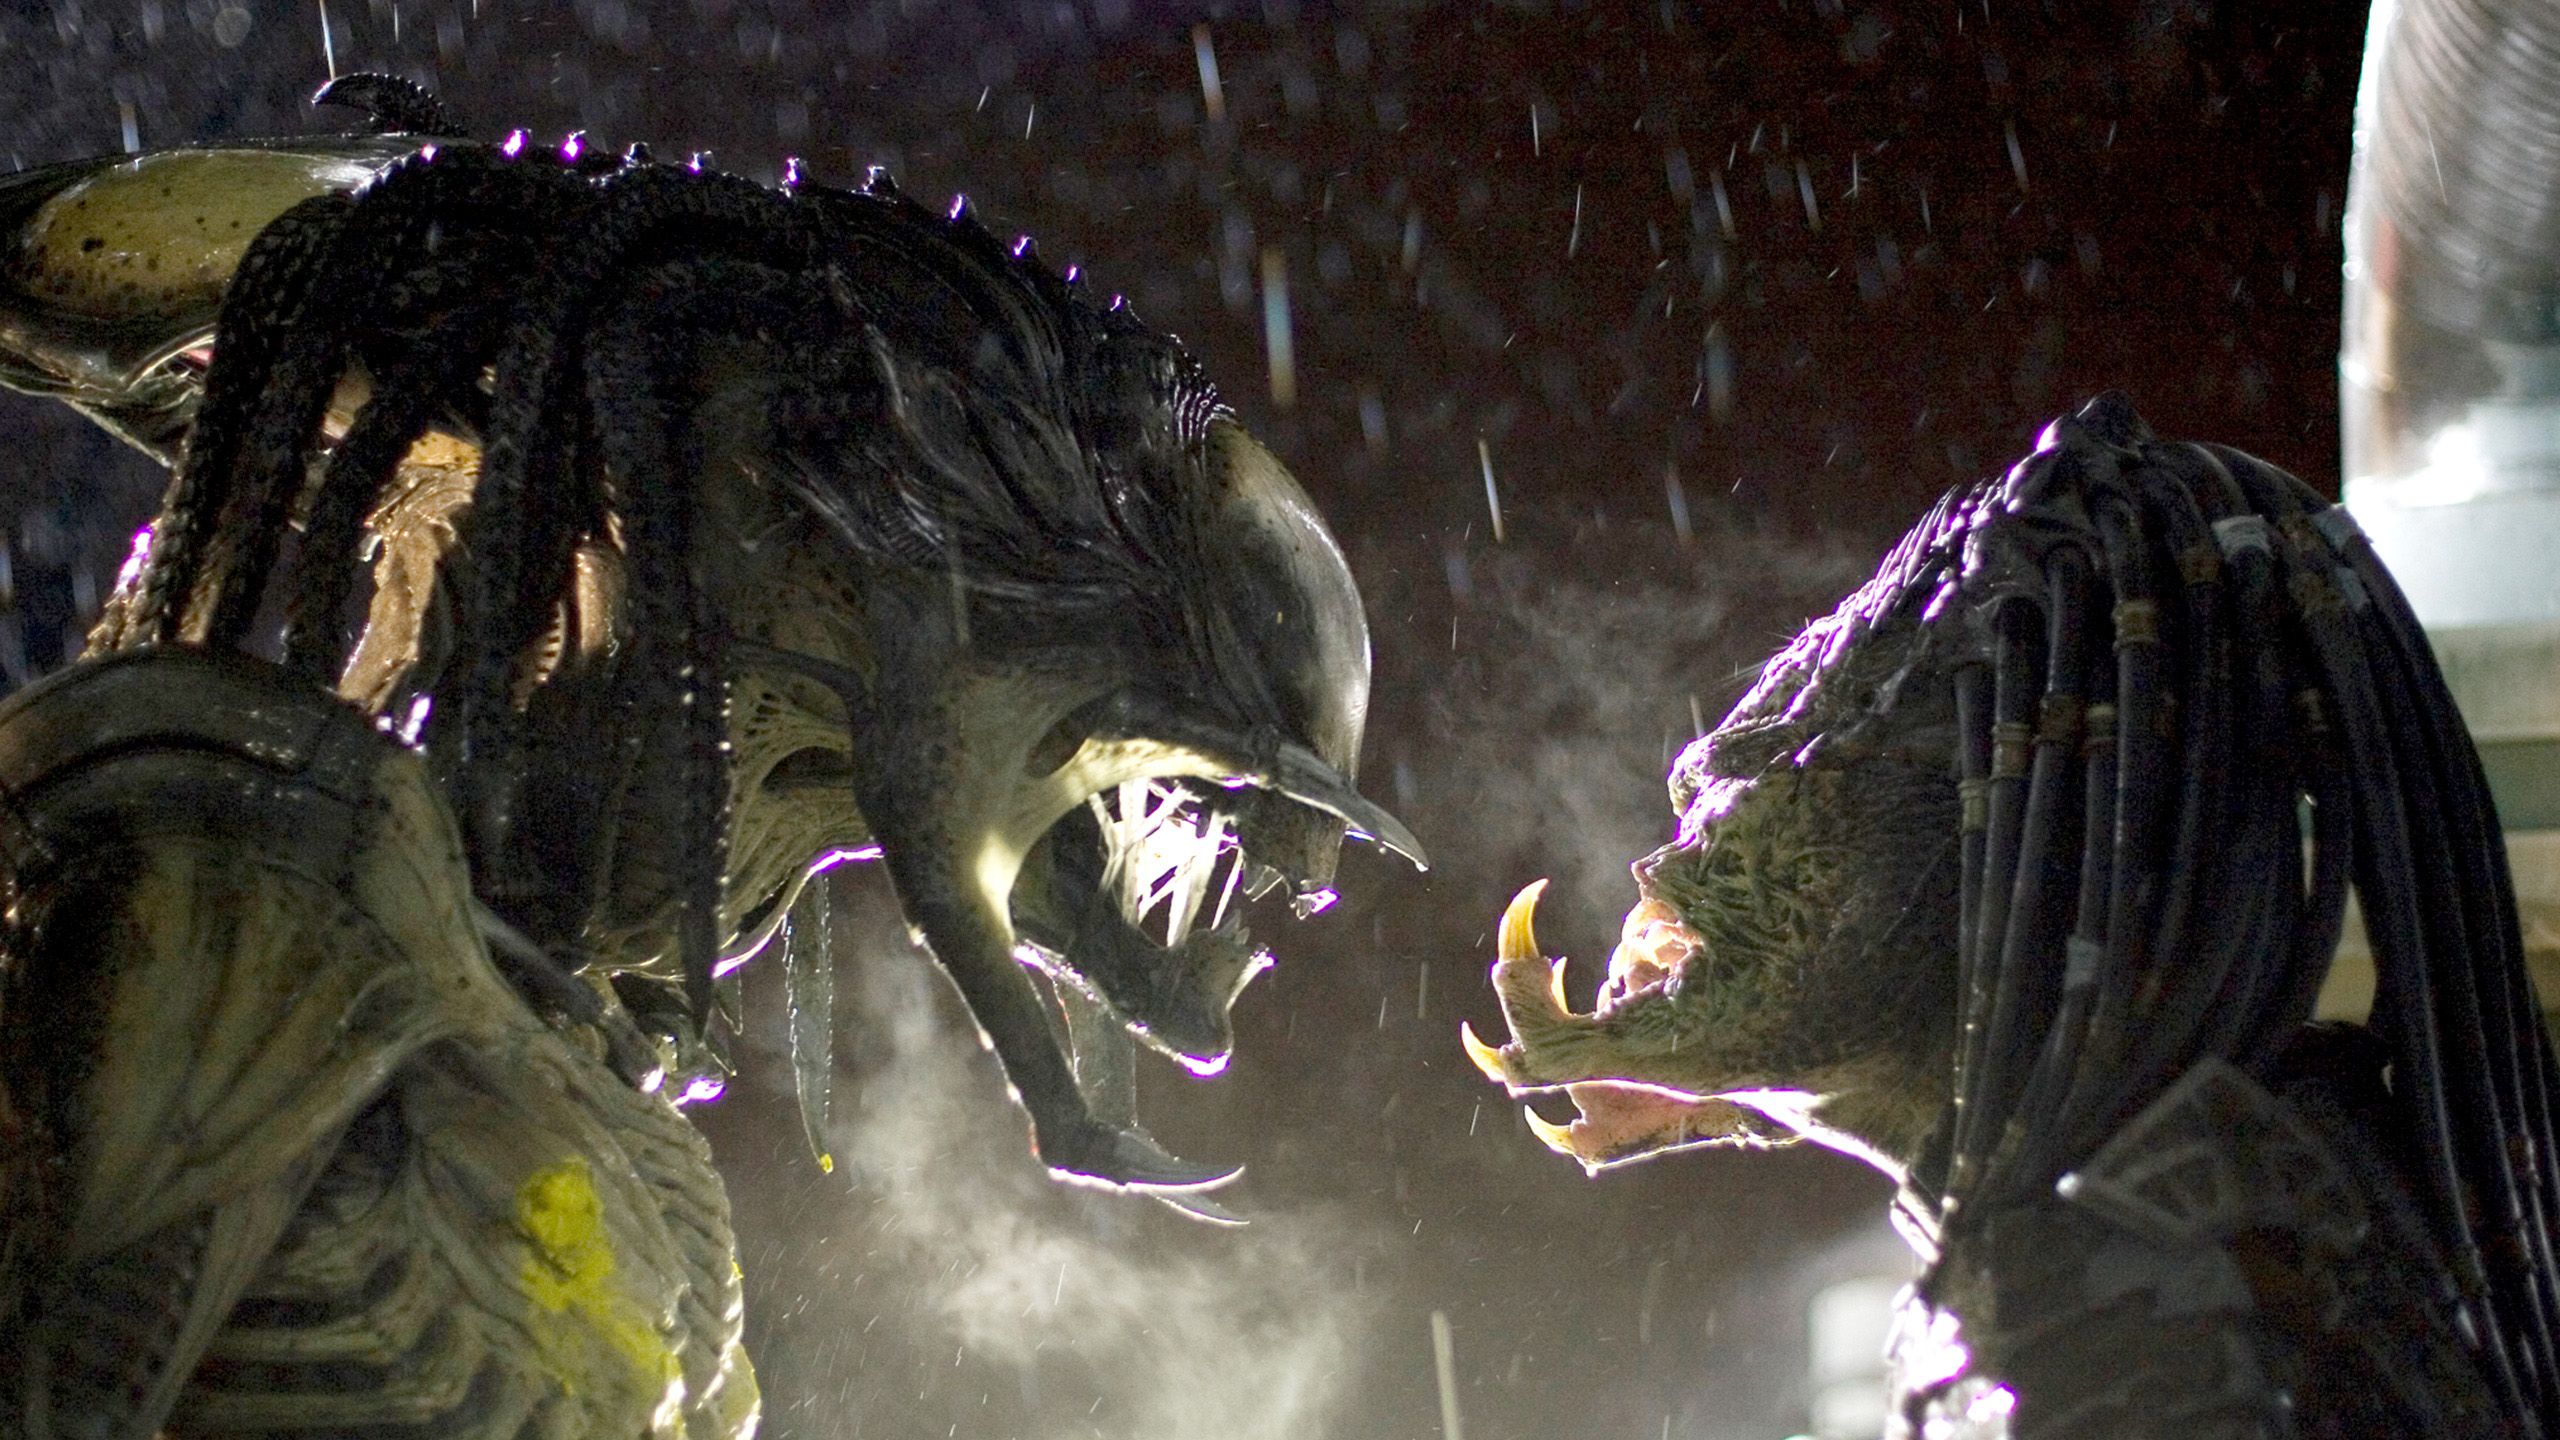 Aliens vs. Predator - Requiem, Full Movie